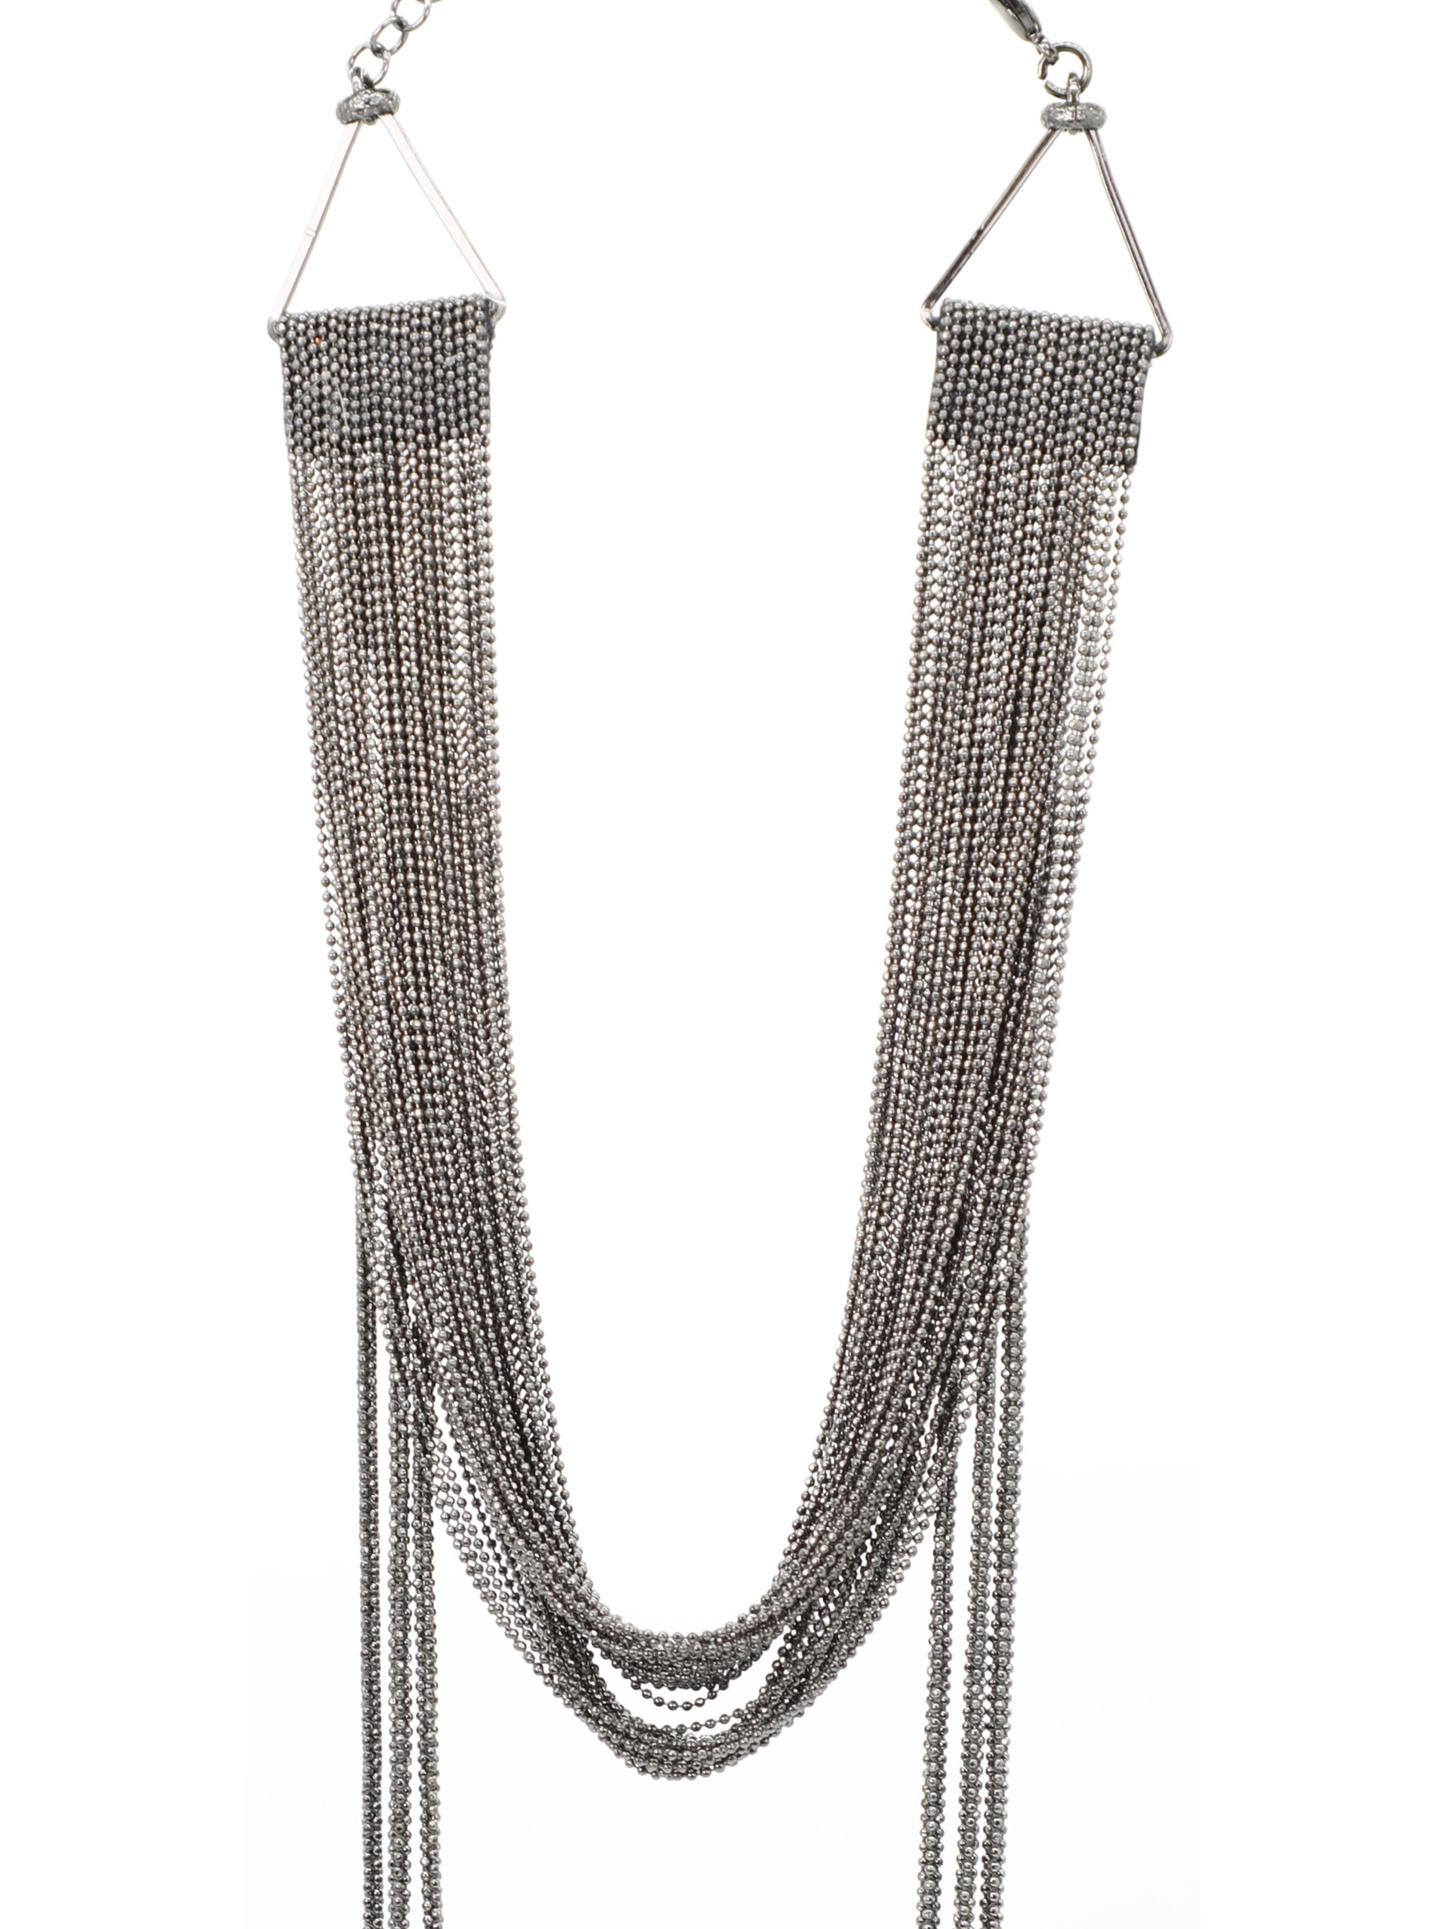 Fabiana Filippi Bead Chain Necklace in Canna Di Fucile